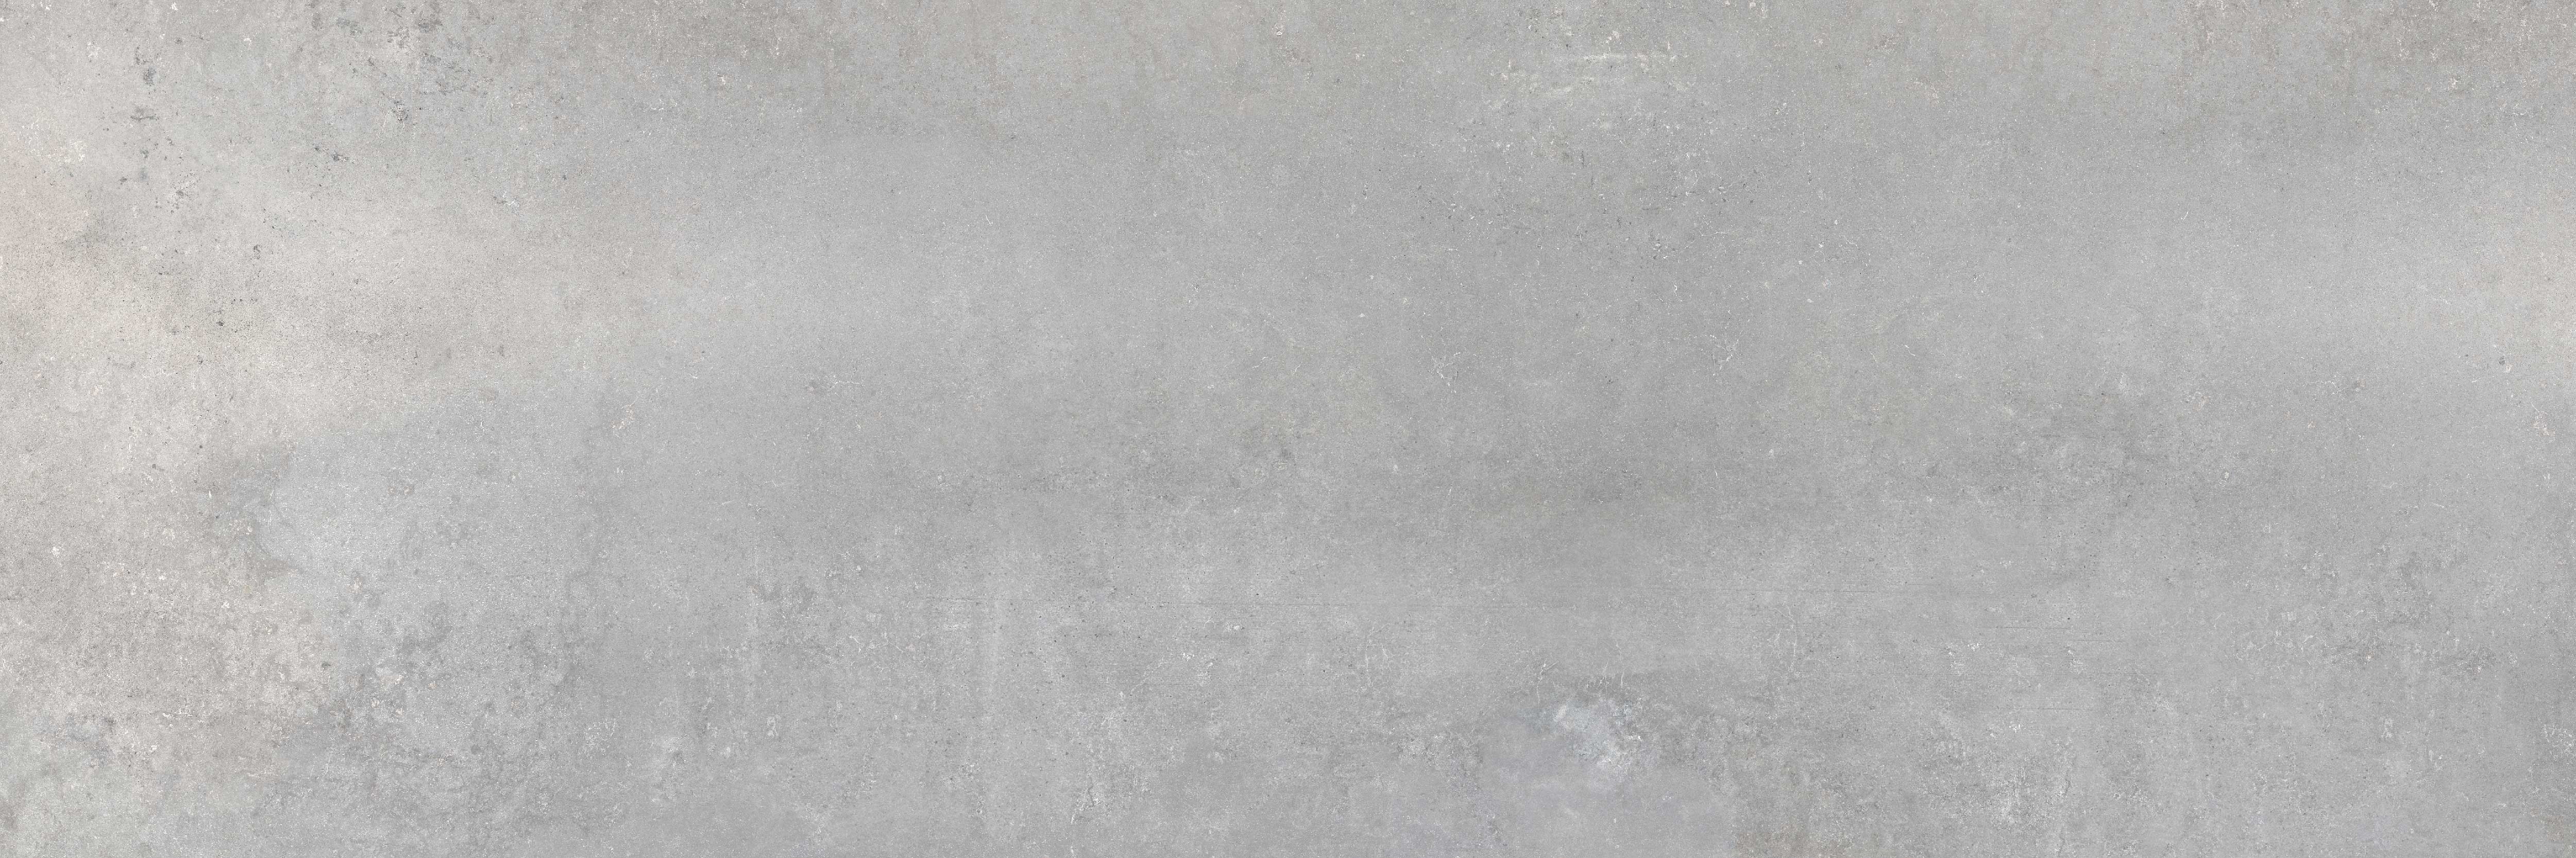 Metalloptik Wand Grey 40x120 cm